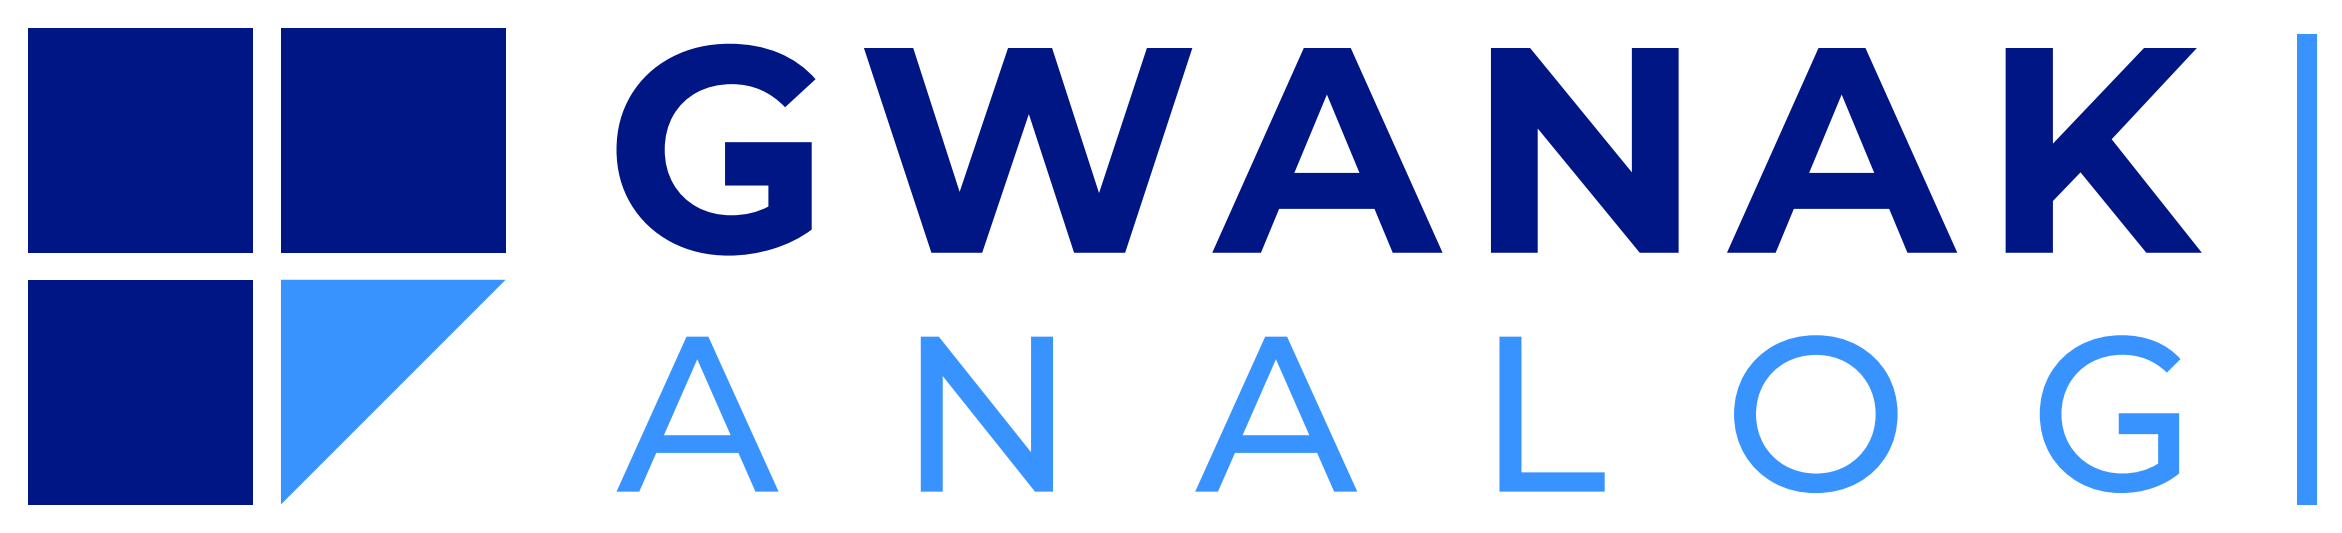 Gwanak Analog Co., Ltd Logo